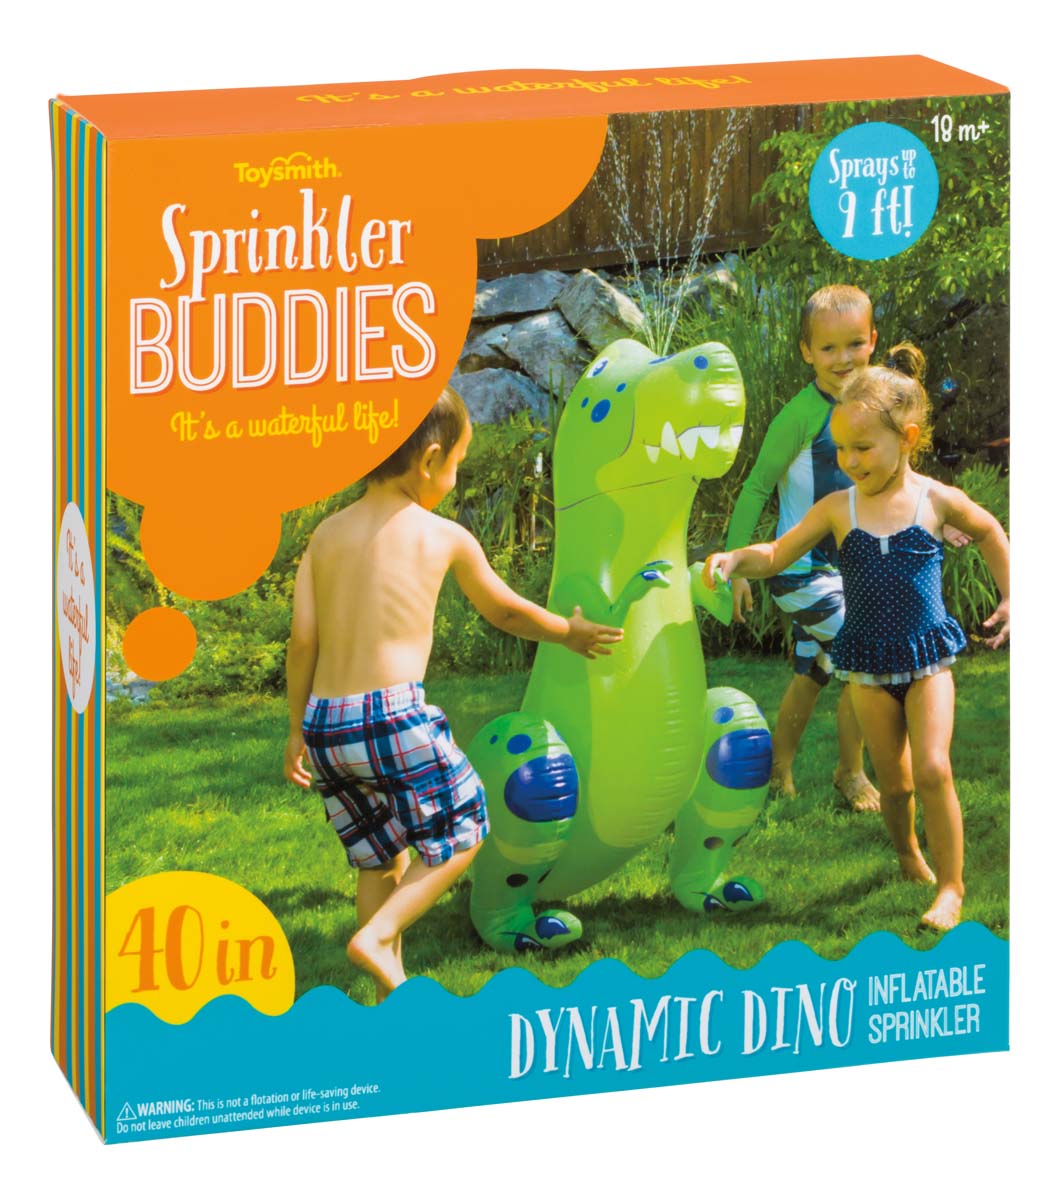 Dynamic Dino Sprinkler package